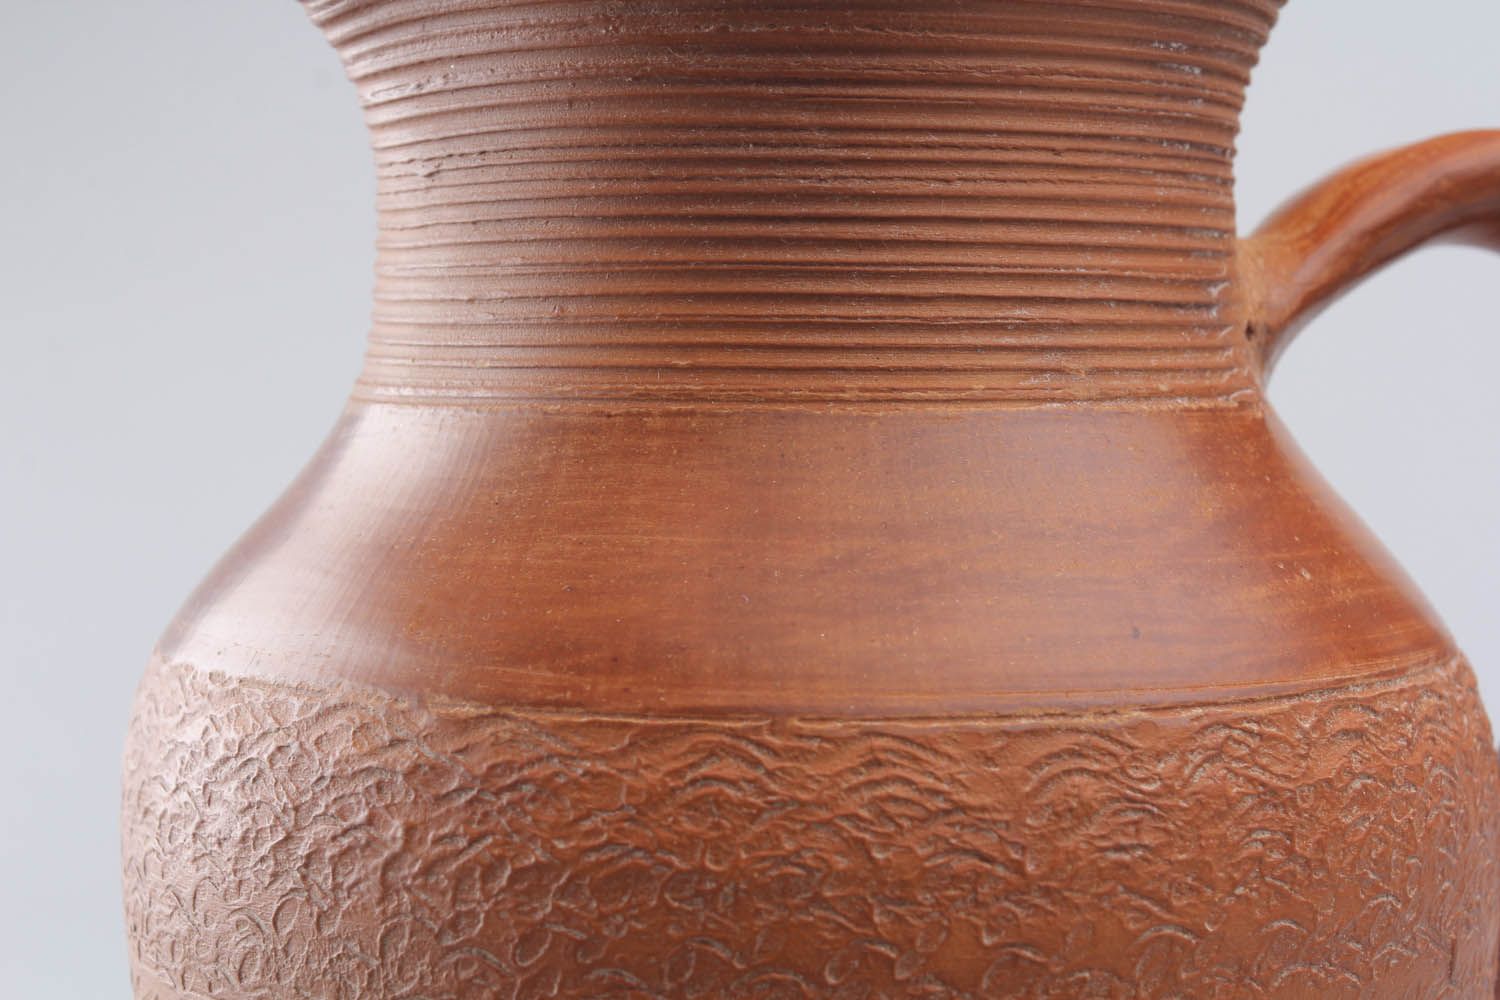 Ceramic terracotta 100 oz water pitcher 0,9 lb photo 3